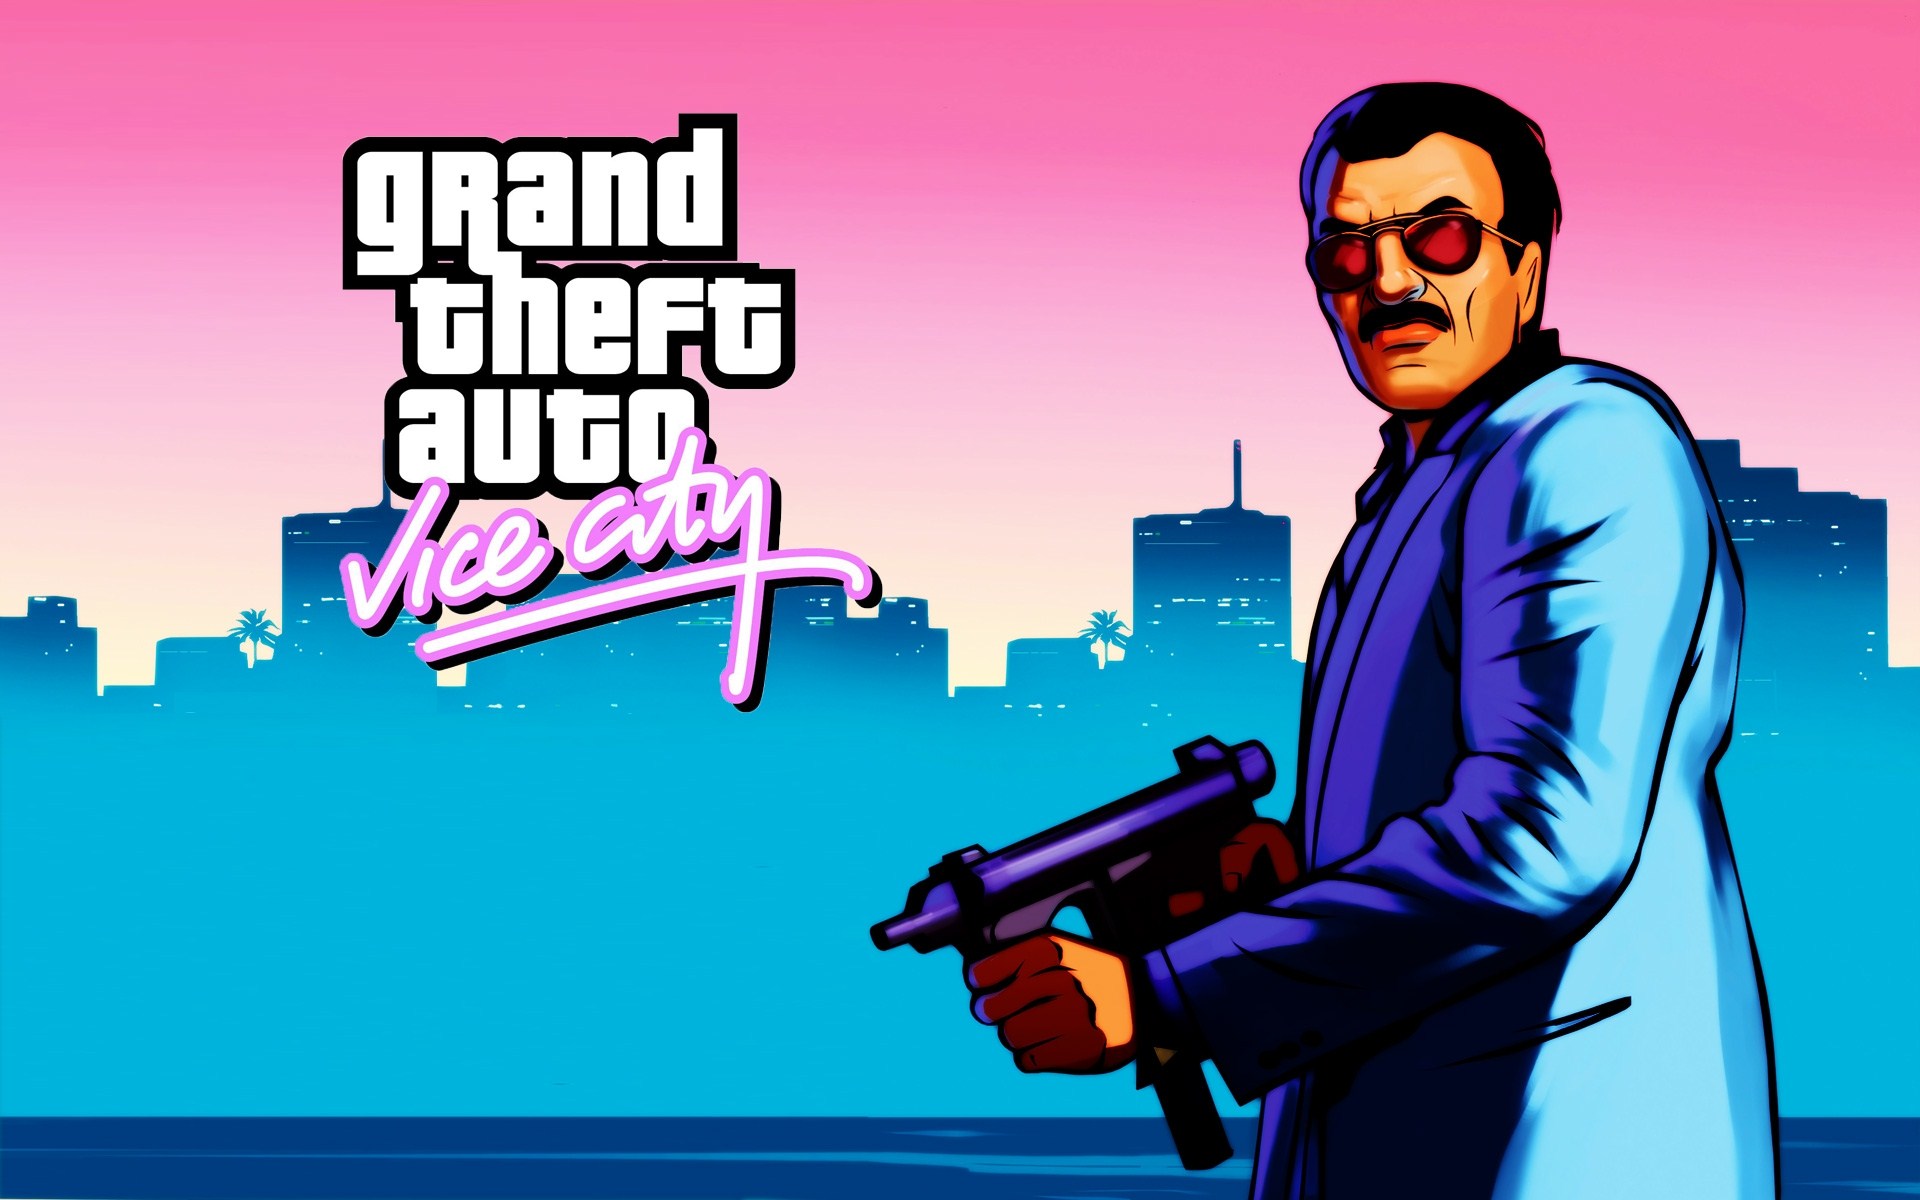 Descargar fondos de escritorio de Grand Theft Auto: Vice City HD